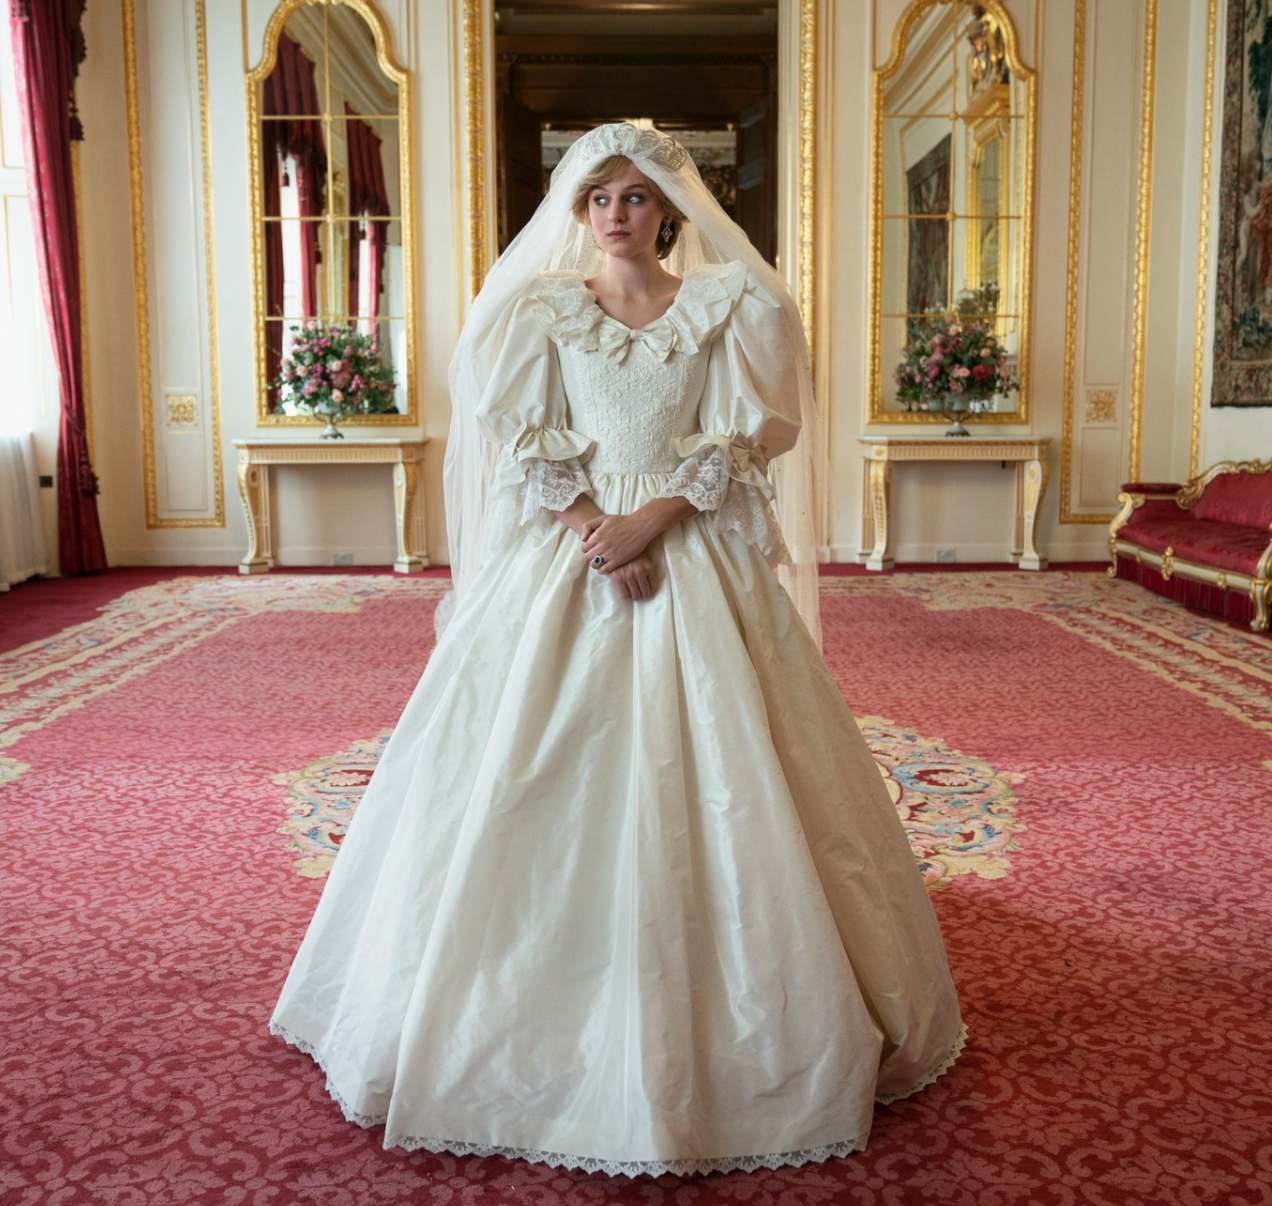 Princess Diana's wedding dress goes on display at Kensington Palace